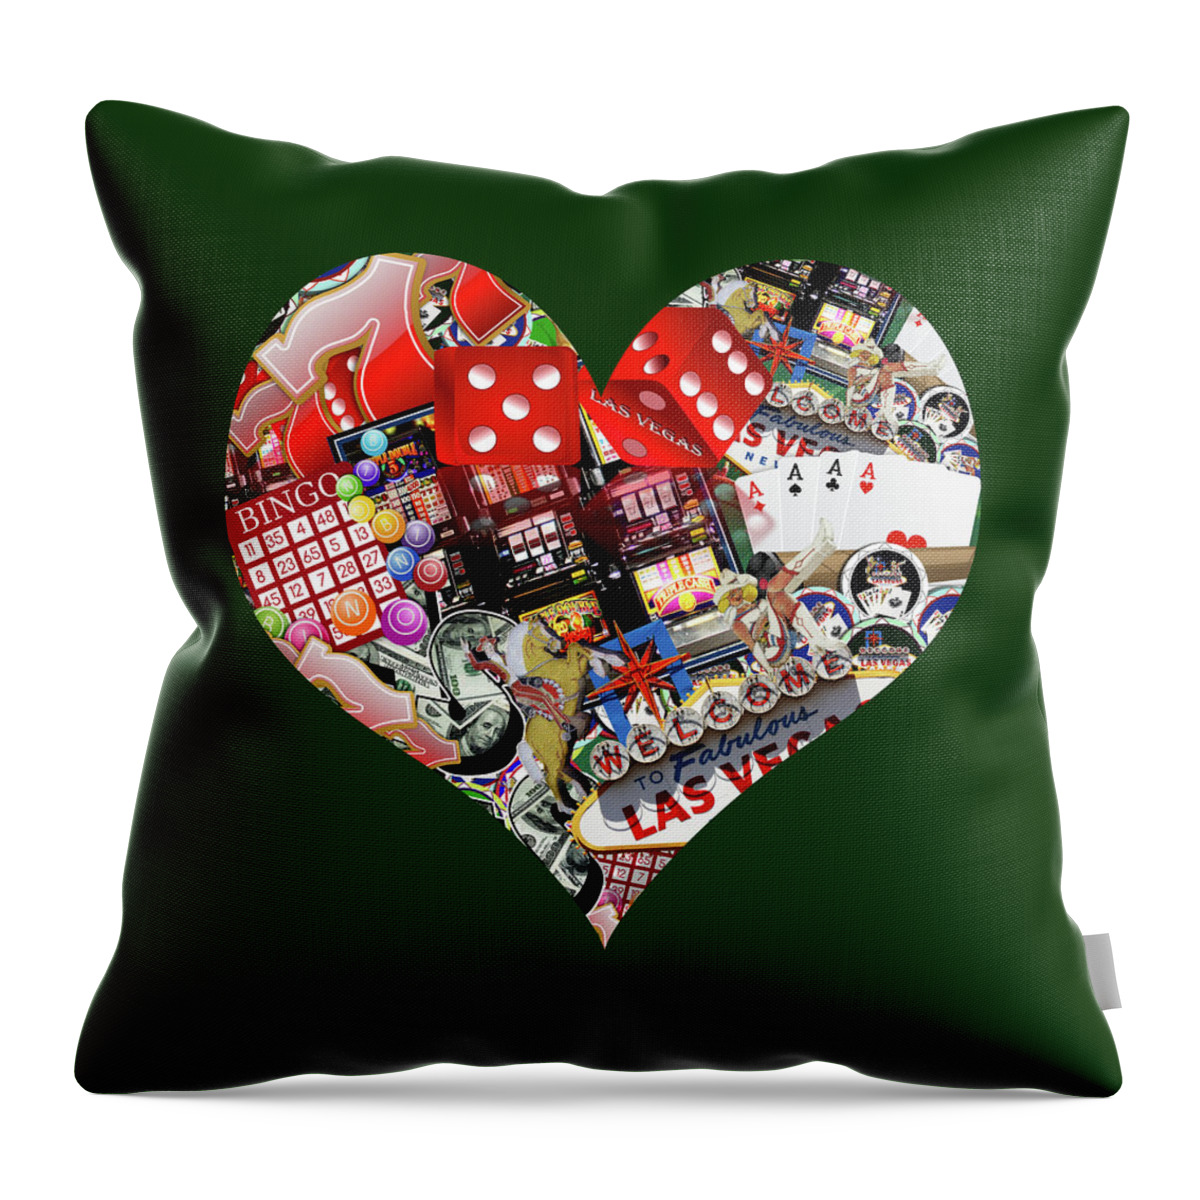 Heart Playing Card Shape Throw Pillow featuring the digital art Heart Playing Card Shape #1 by Gravityx9 Designs